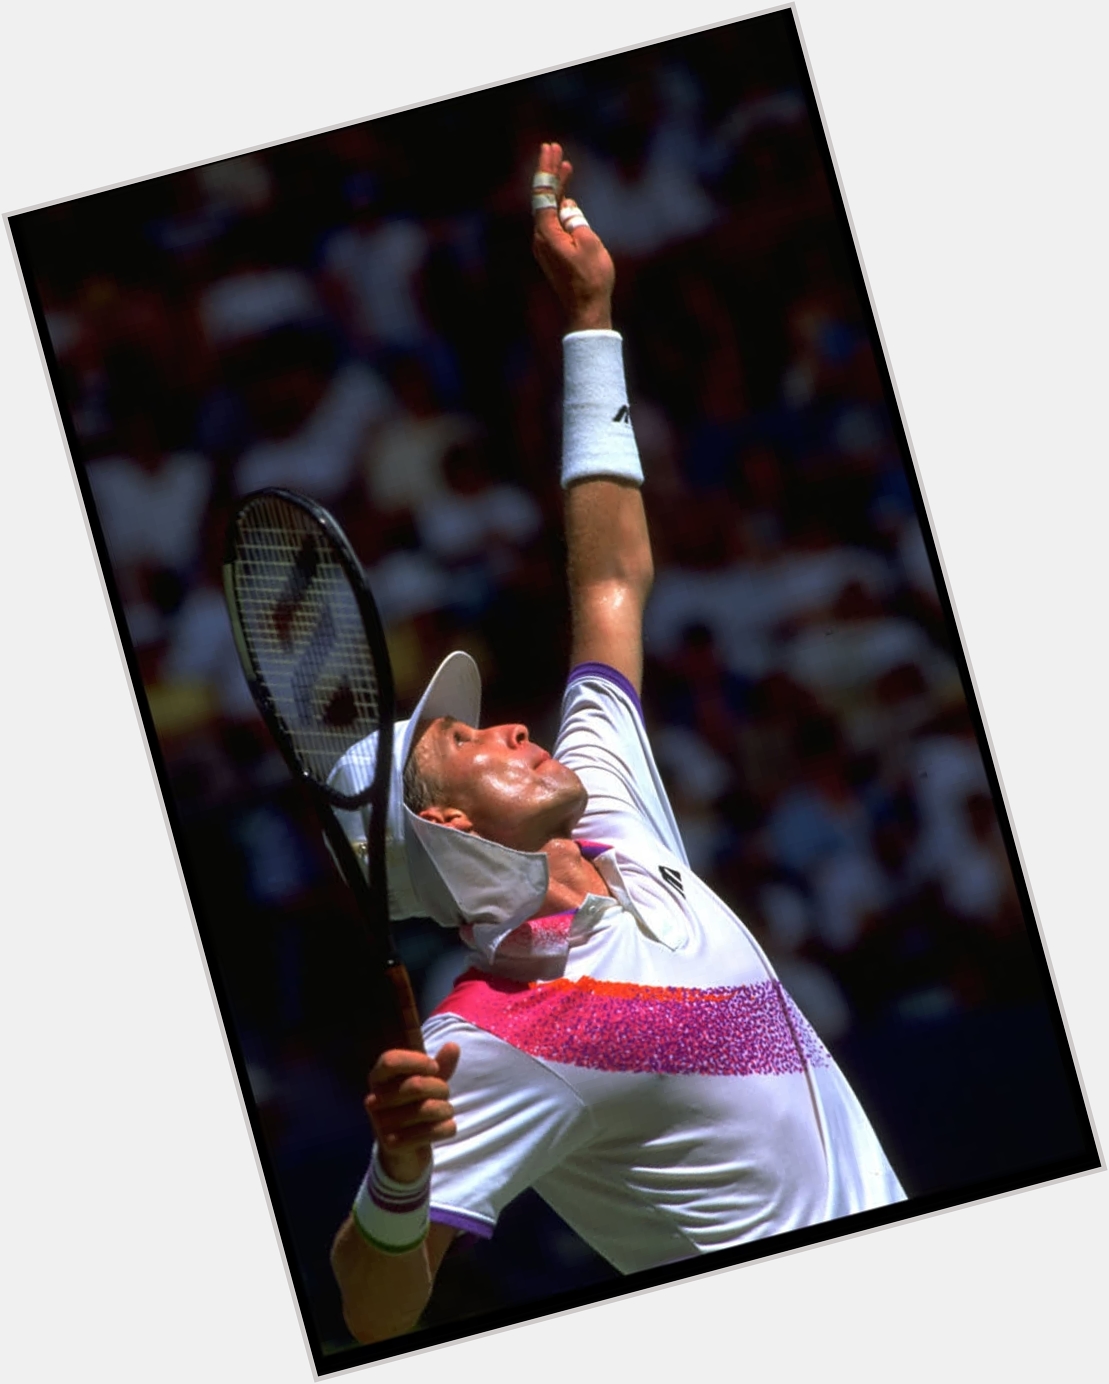 Happy birthday Ivan Lendl. 8 majors, 2 a legend of the sport. 